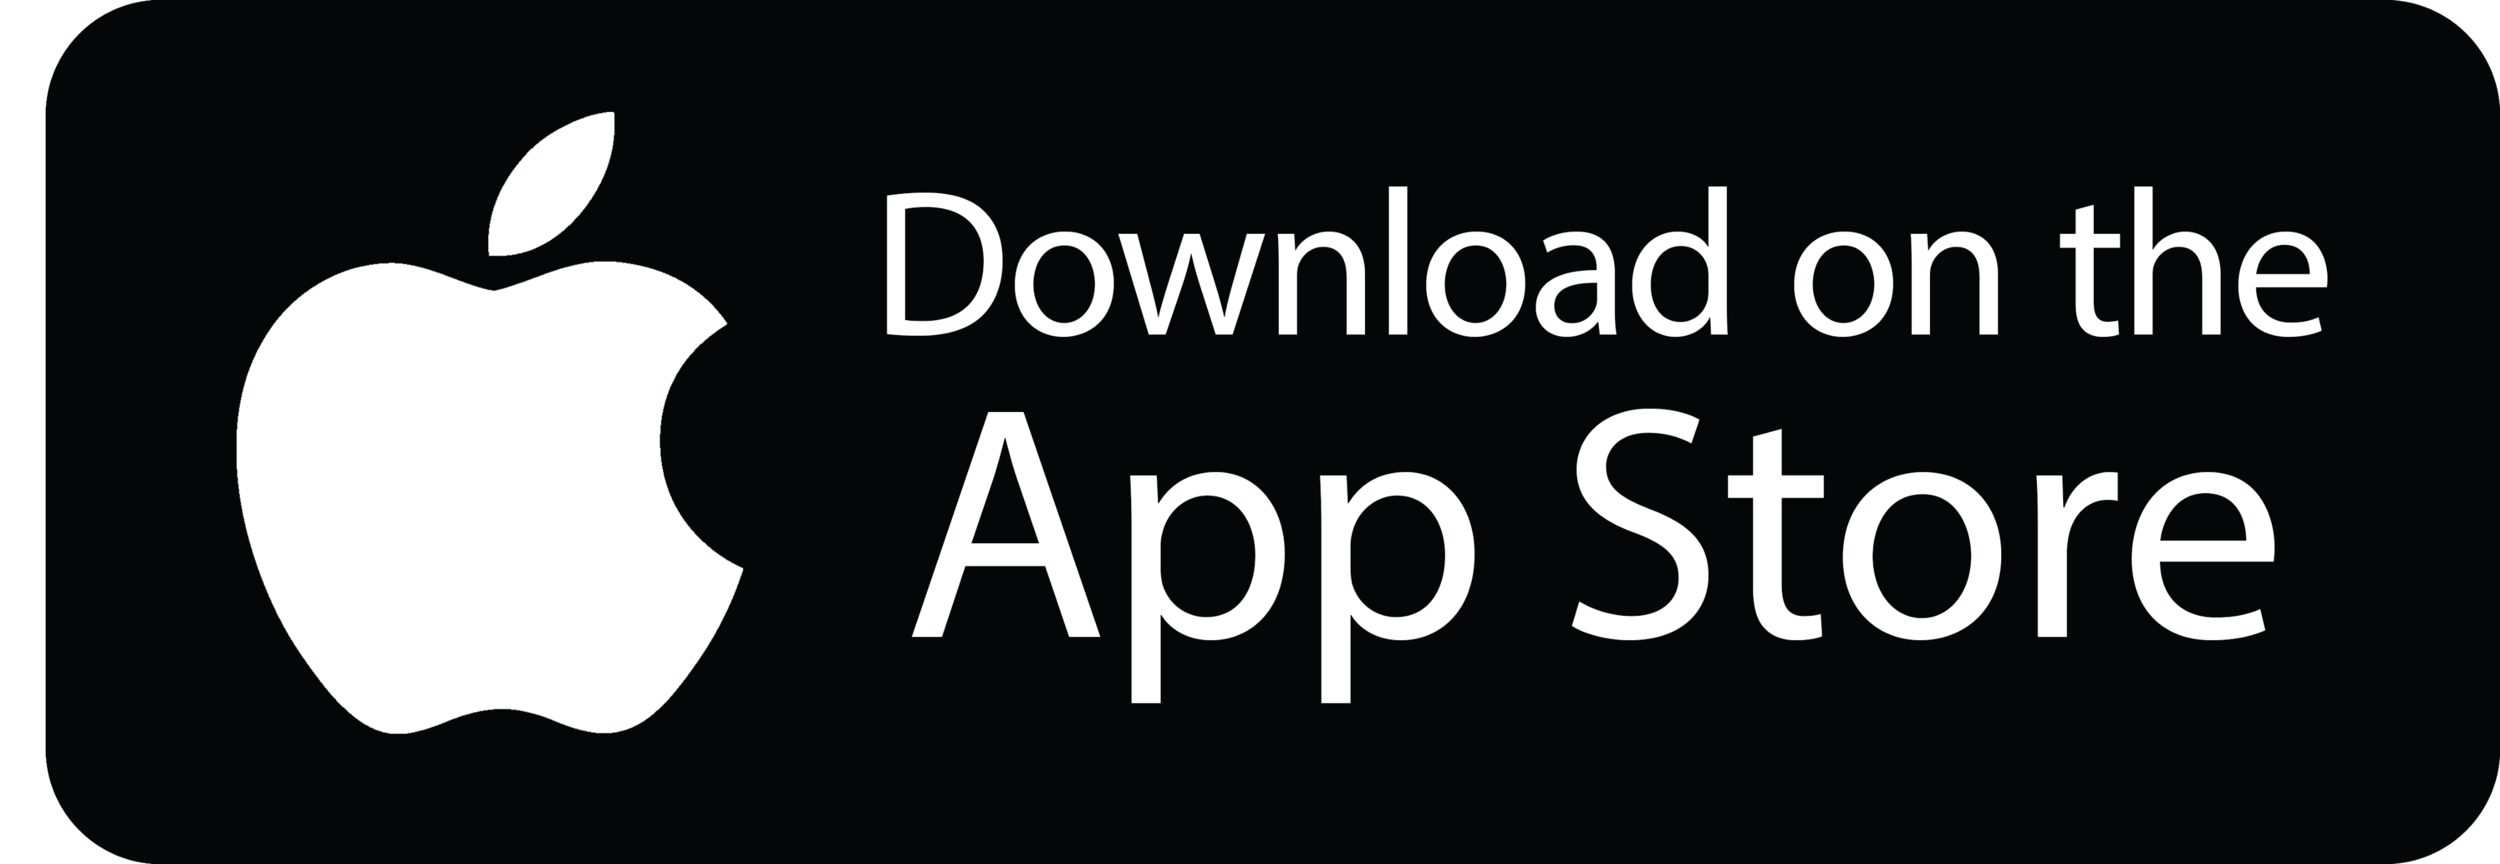 Wrumer on the App Store